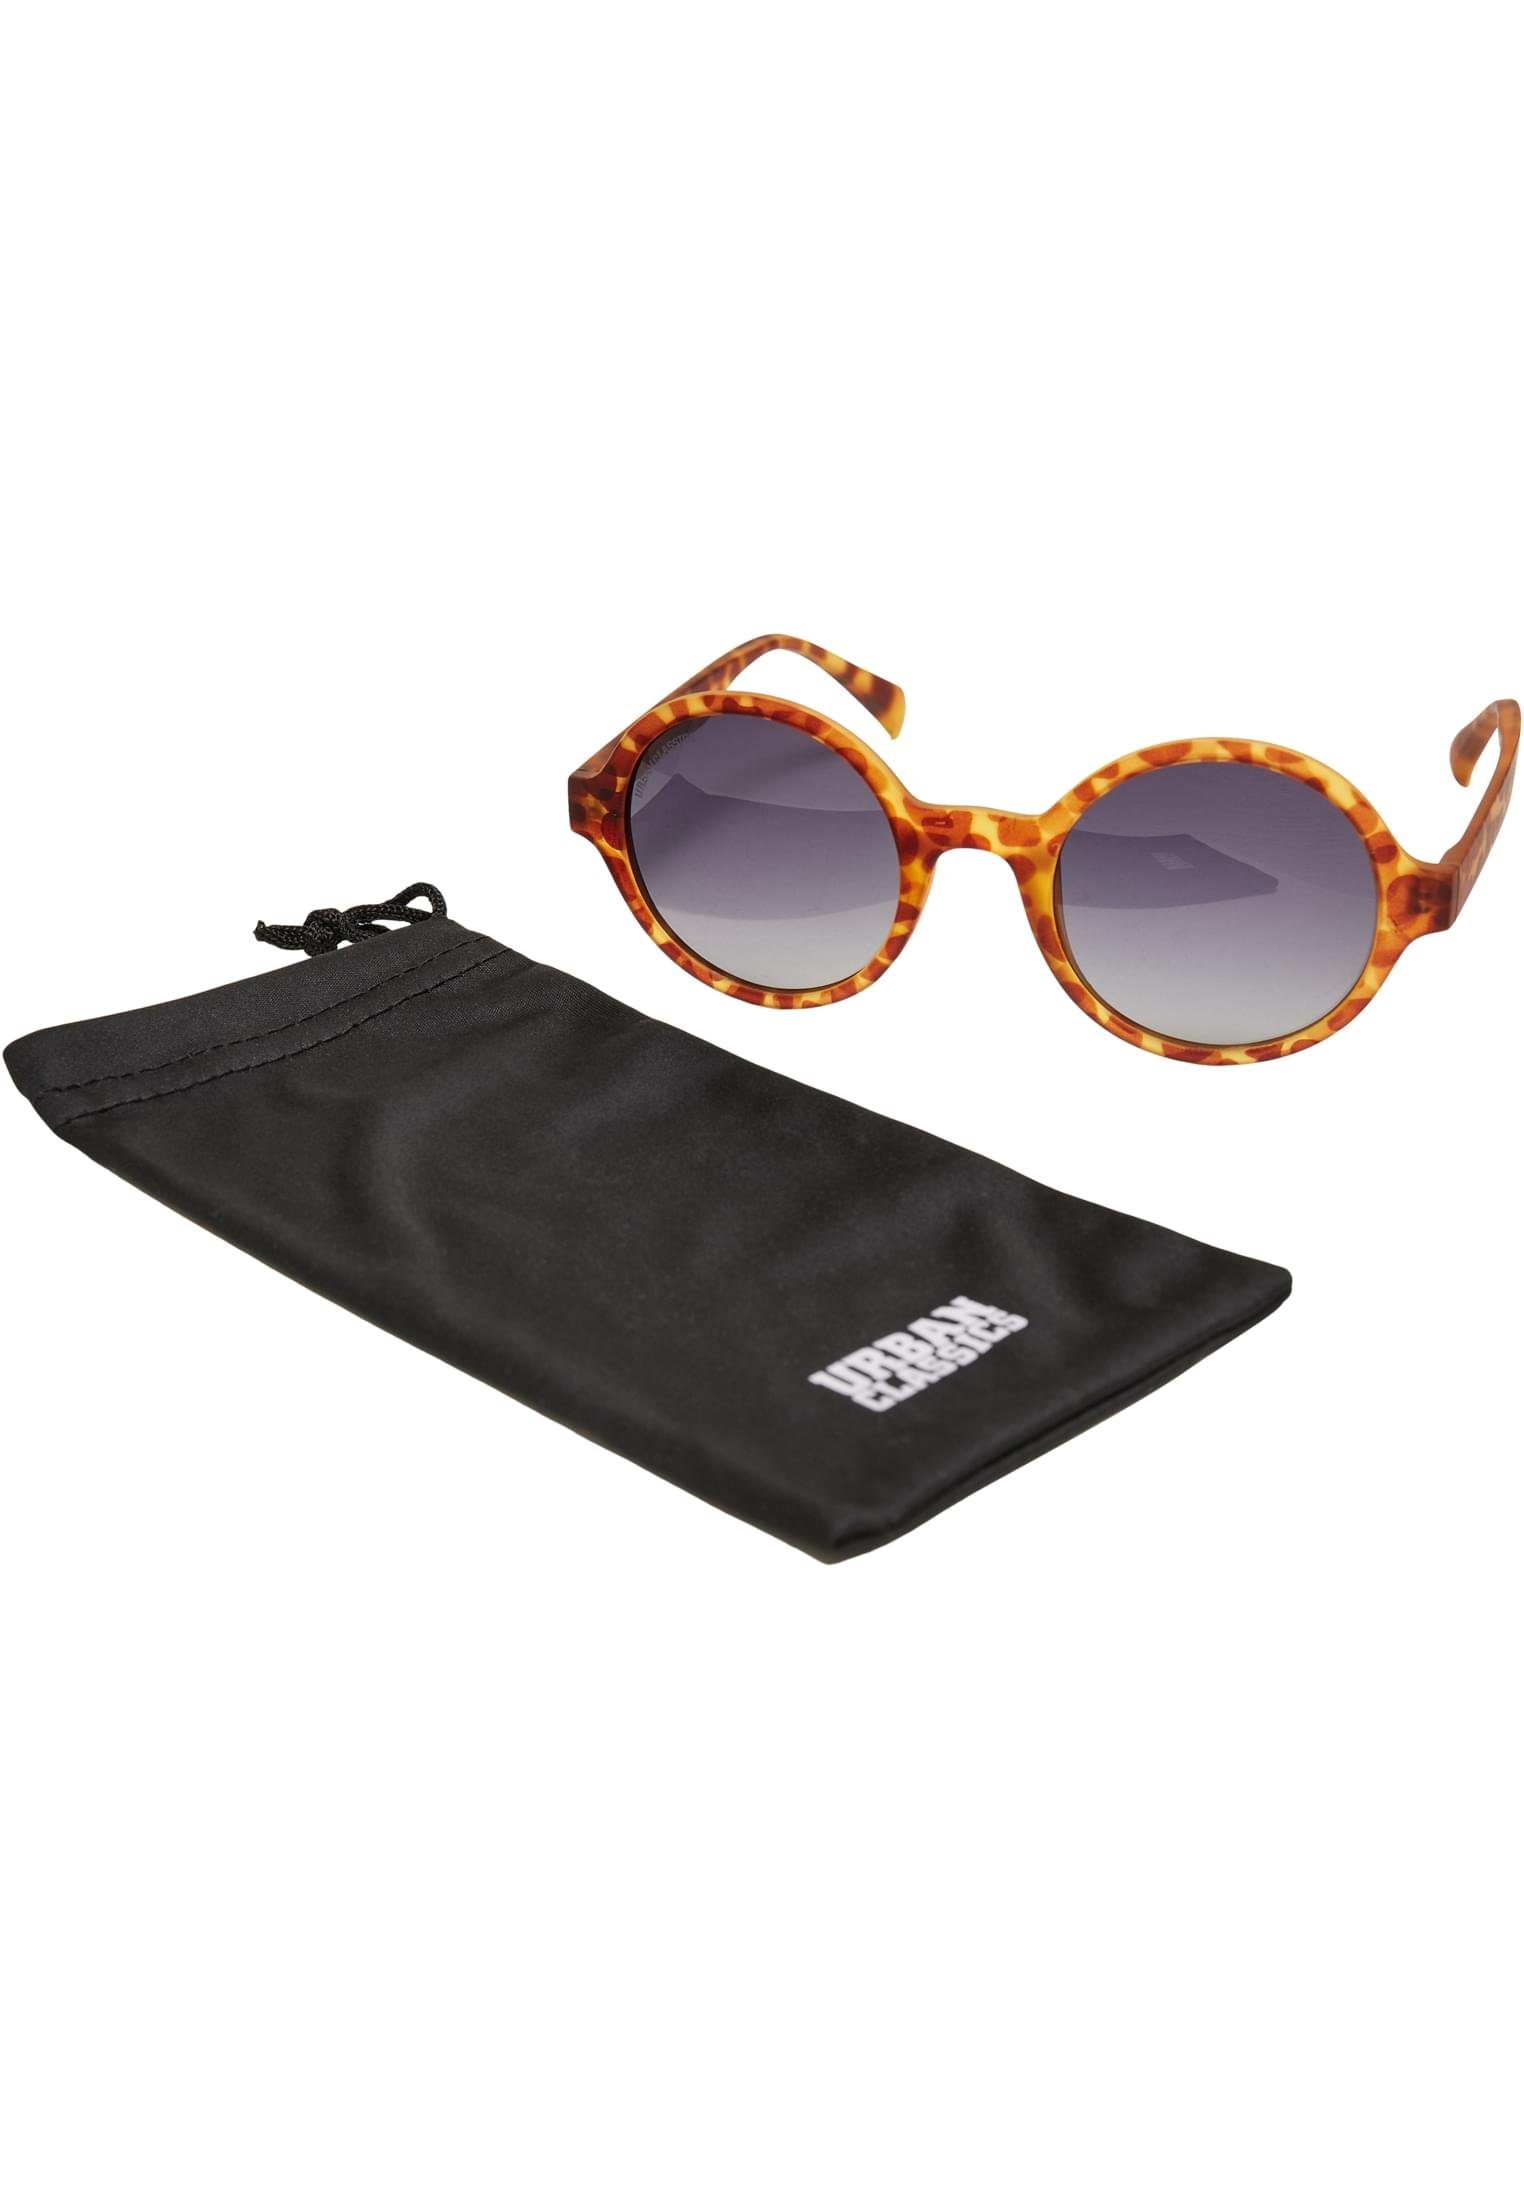 Sonnenbrille UC Retro brown URBAN Accessoires leo/grey Sunglasses CLASSICS Funk